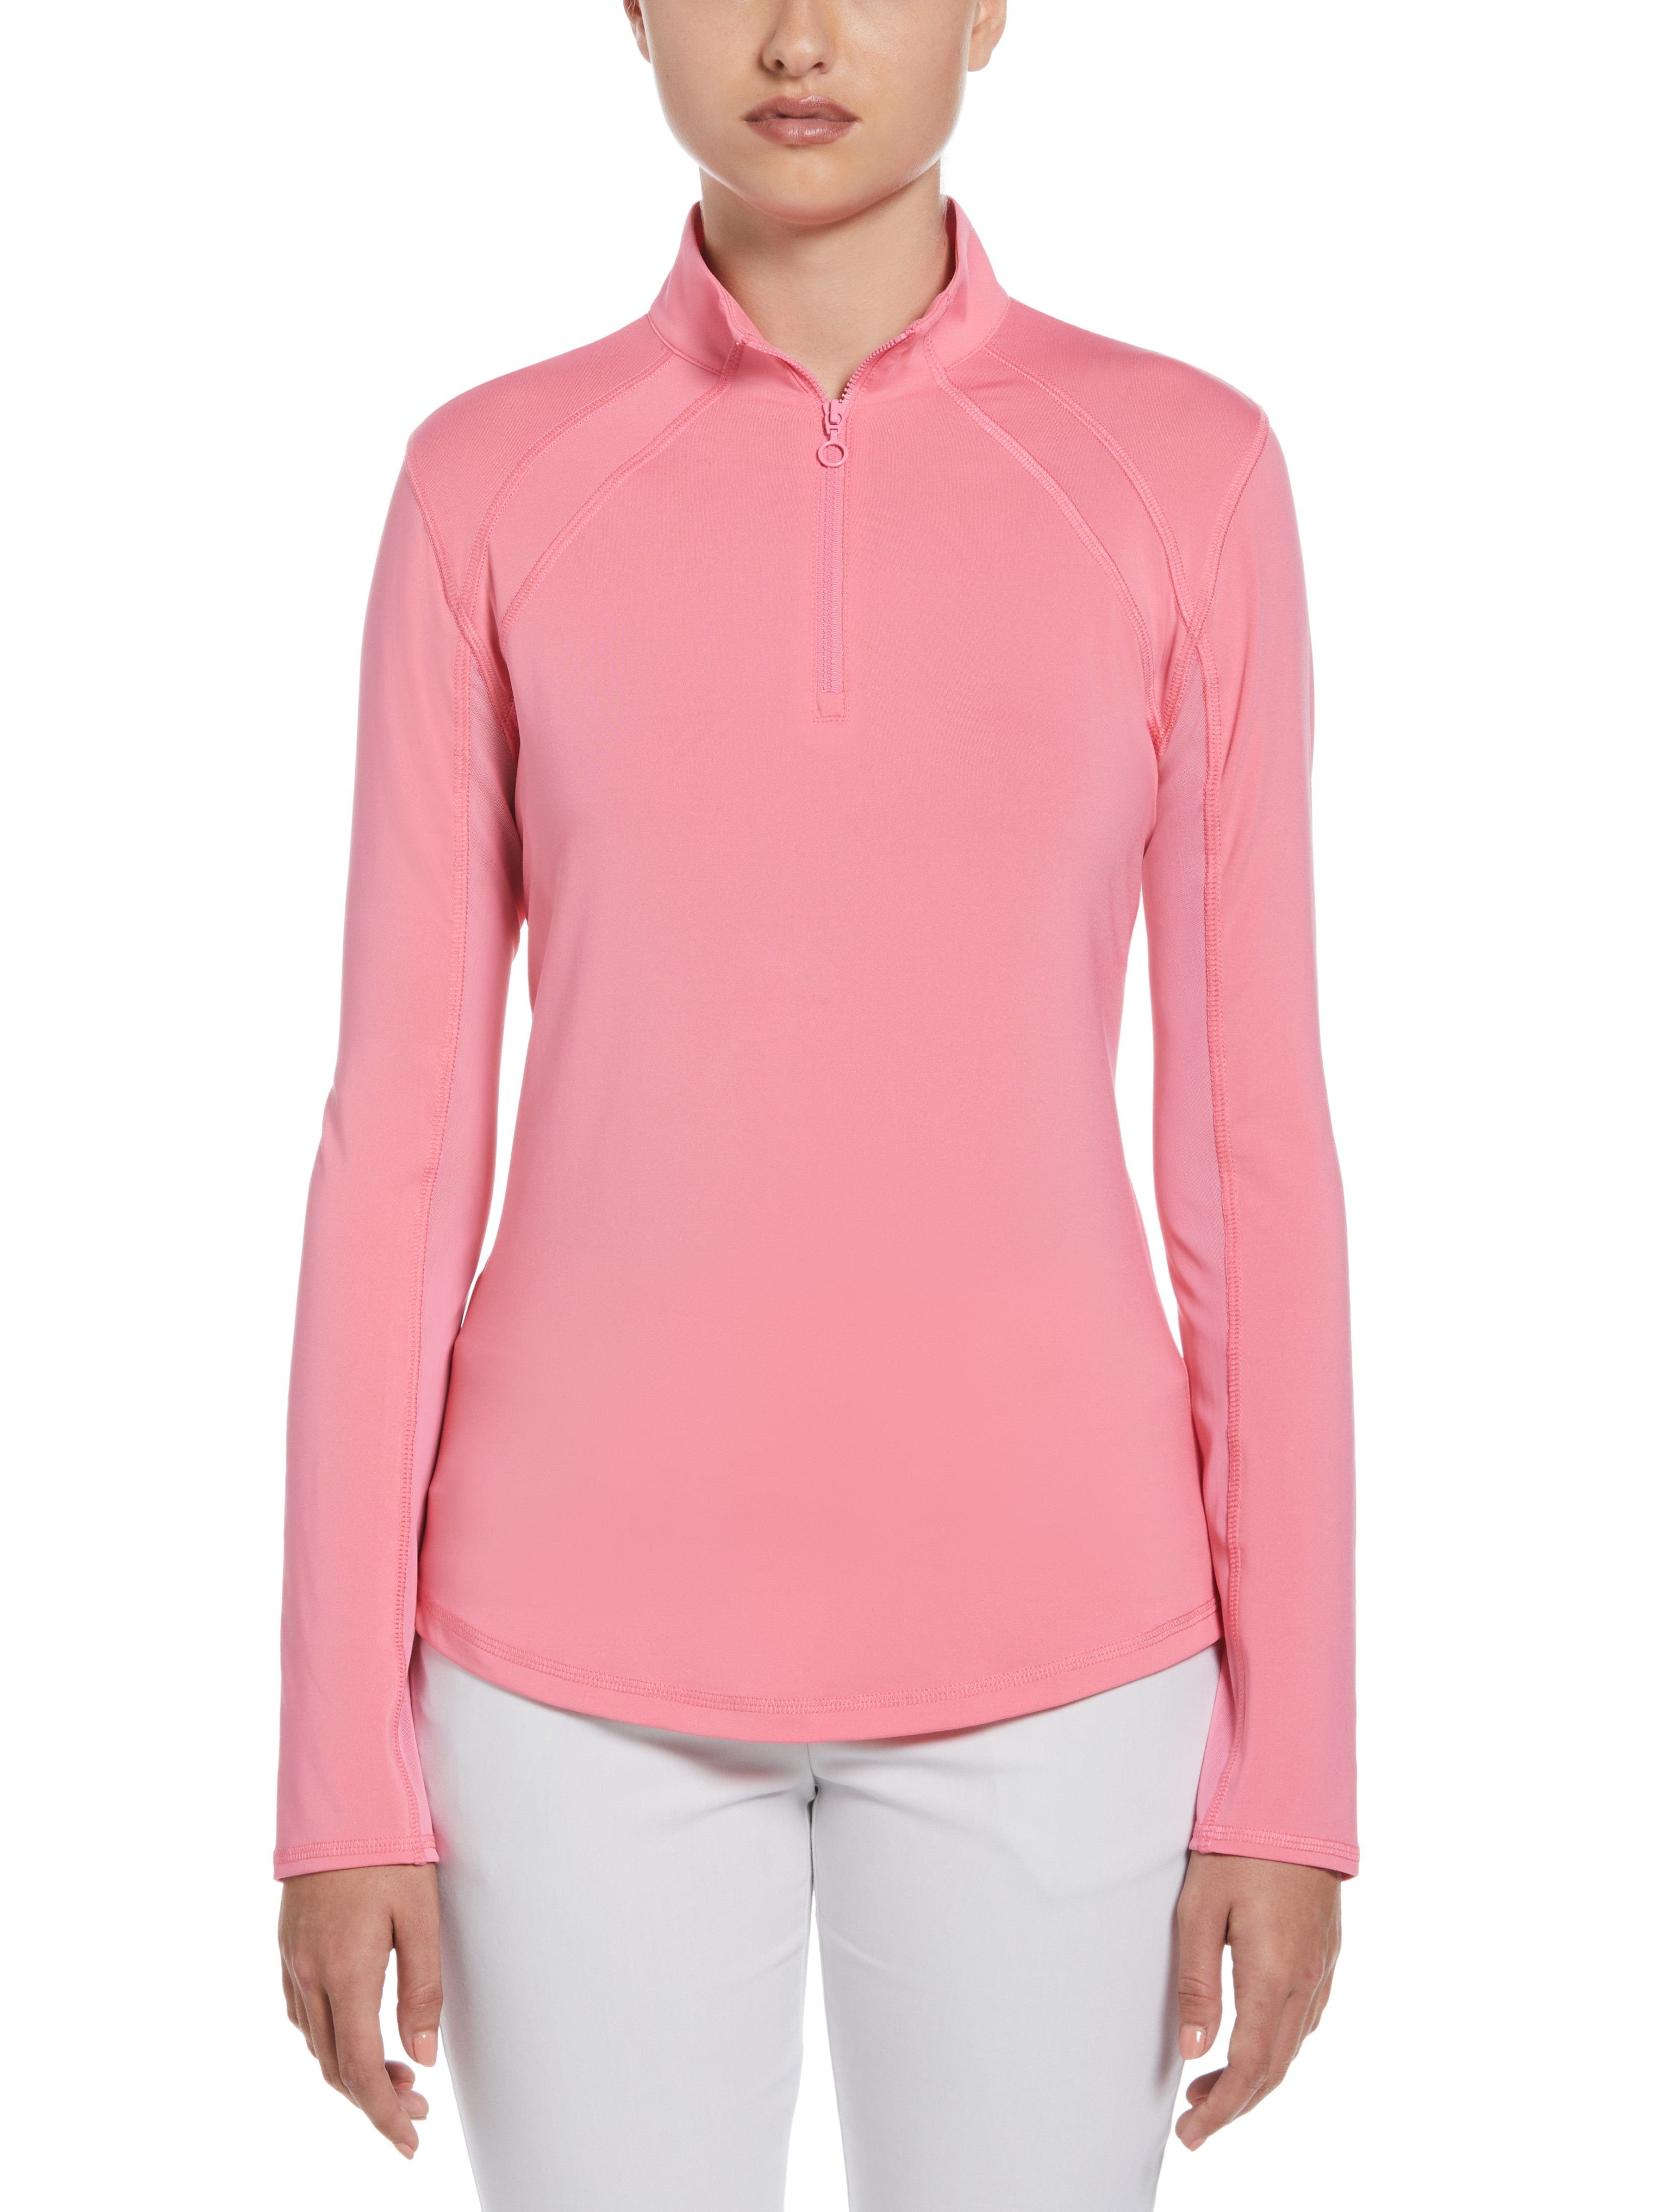 PGA TOUR Apparel Womens Sun Protection Golf Shirt w/ Mesh Panels, Size Large, Flowering Ginger Pink, Polyester/Spandex | Golf Apparel Shop